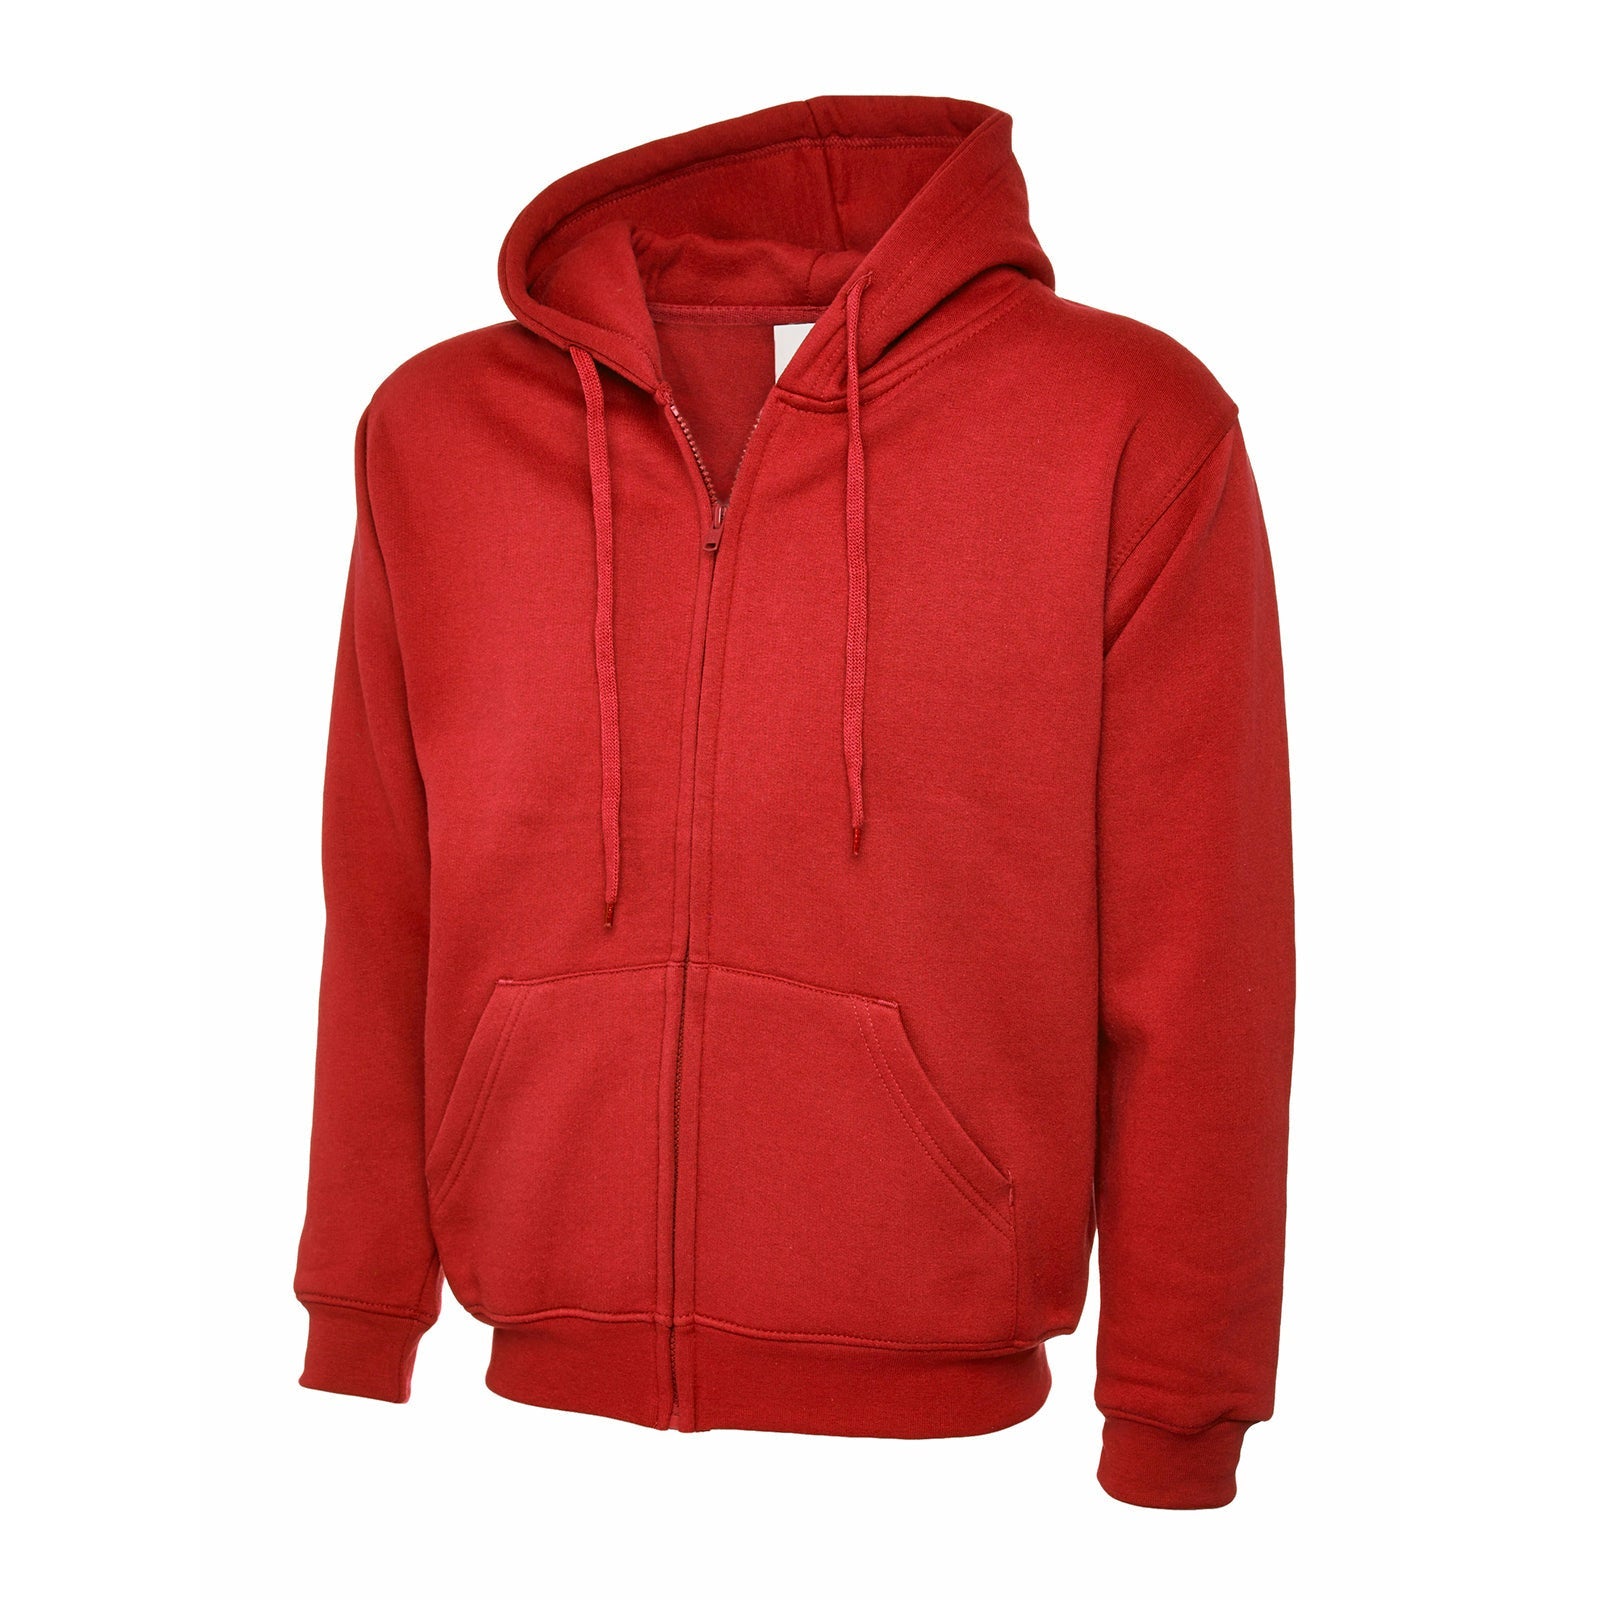 Adults Classic Full Zip Hooded Sweatshirt Red